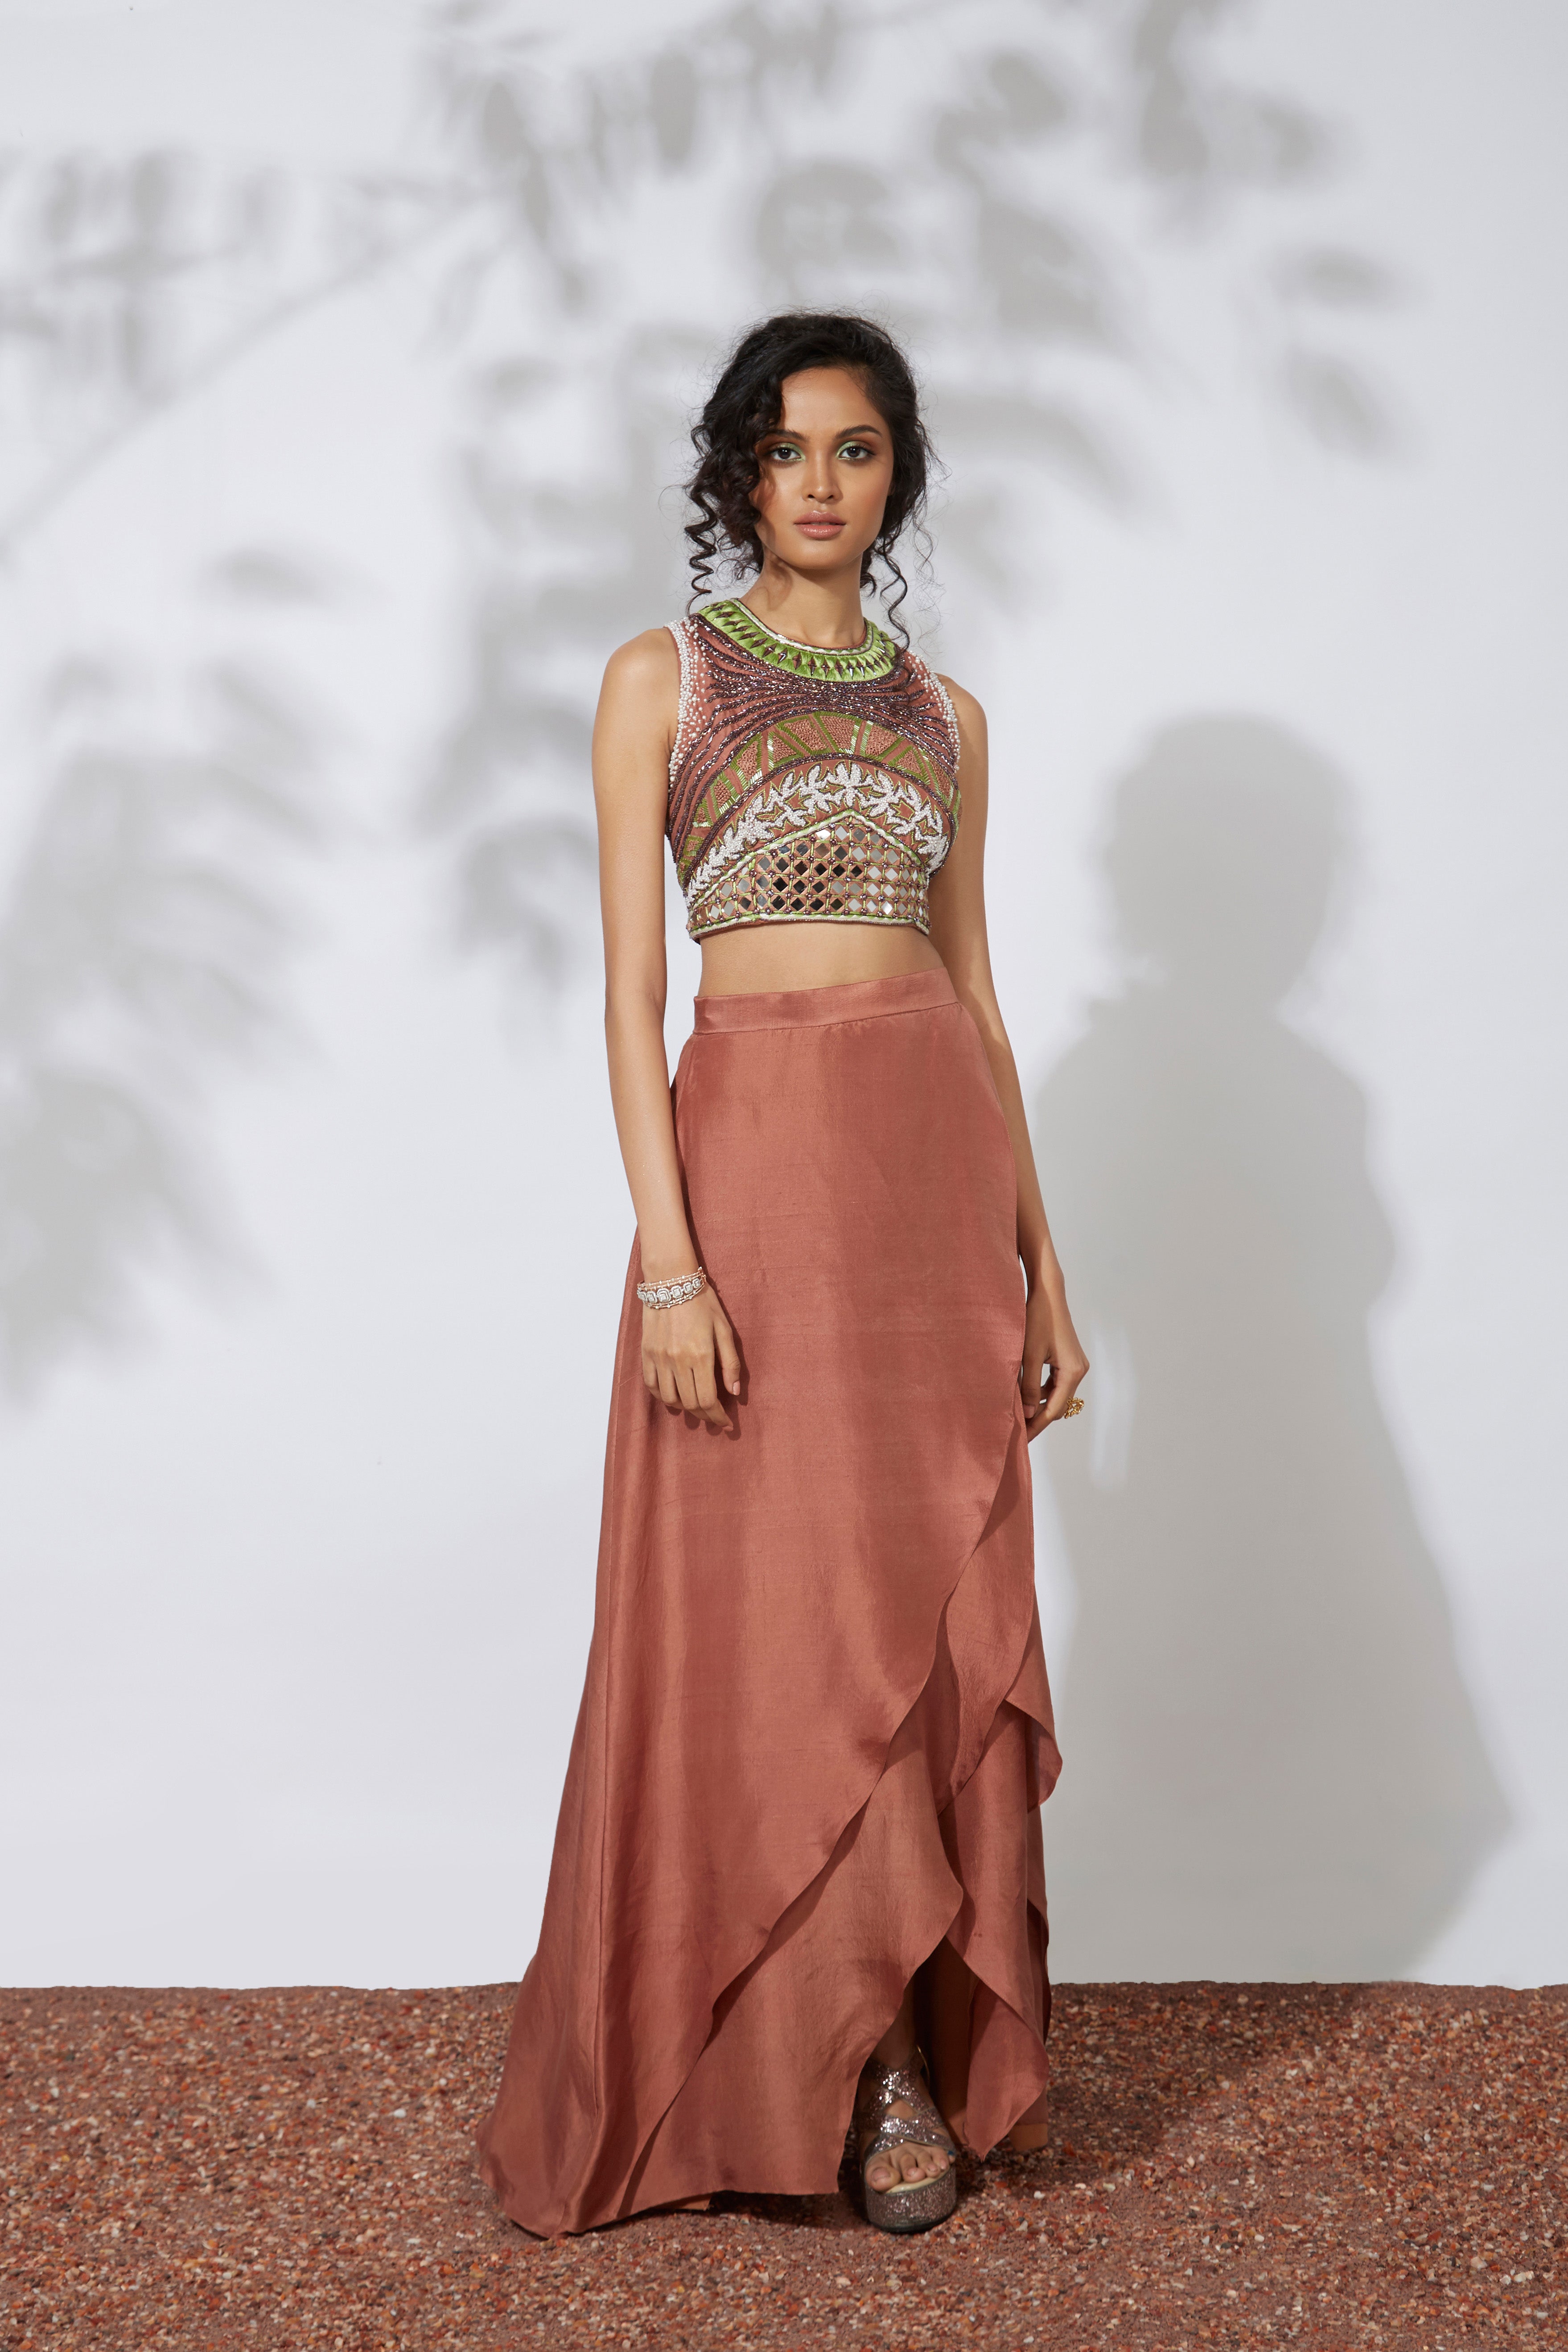 Mehak Murpana - Ochre Skirt with Embroidered Crop Top